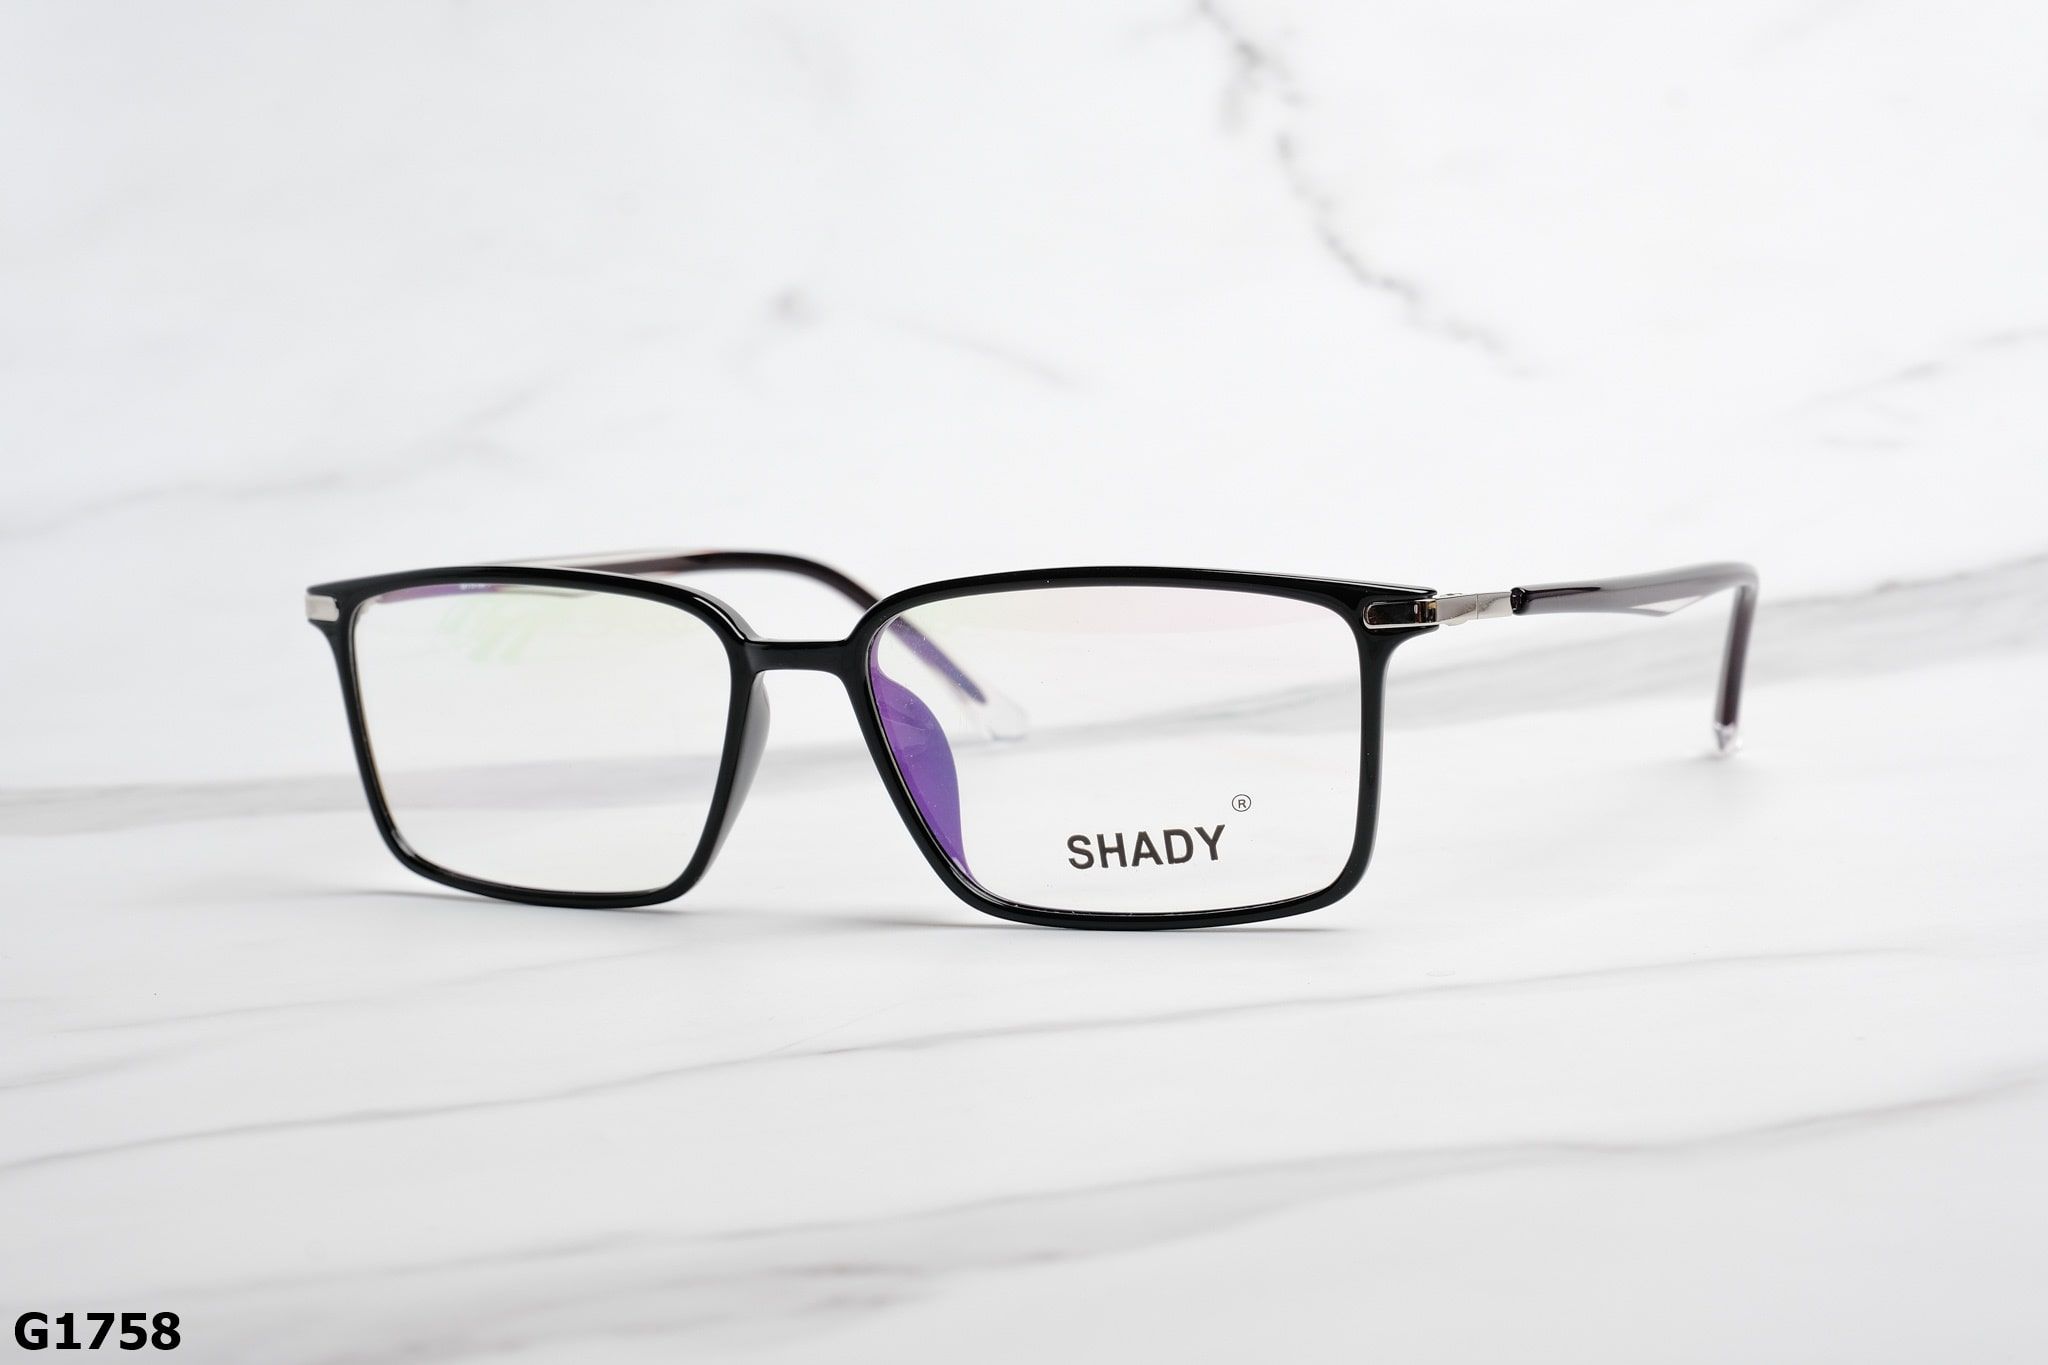  SHADY Eyewear - Glasses - G1758 